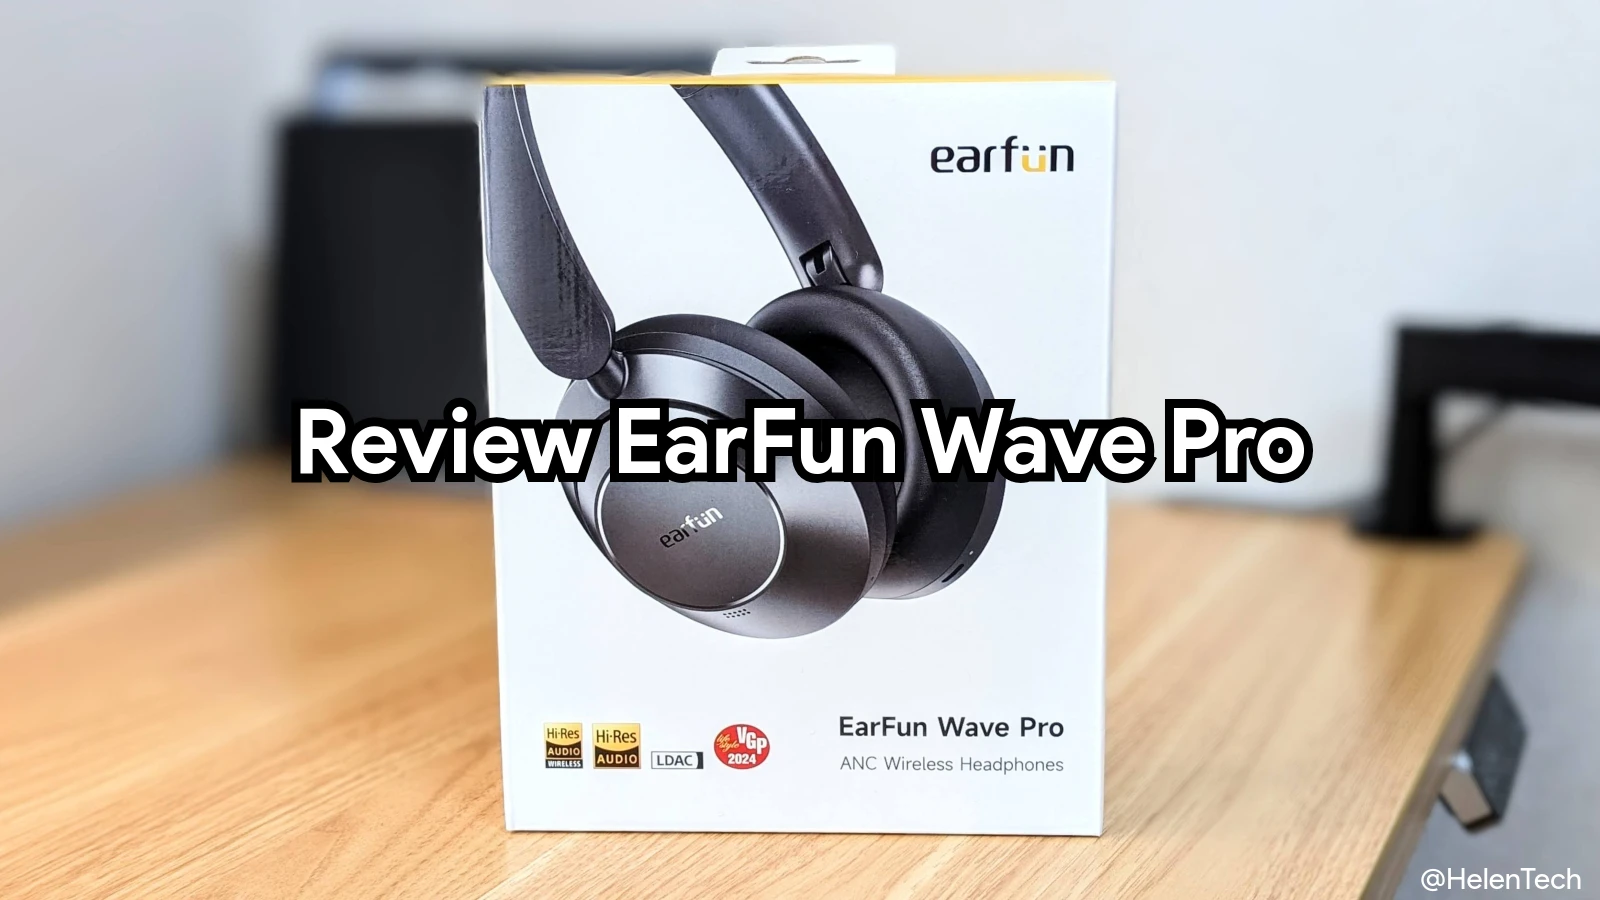 EarFun Wave Pro｣を実機レビュー。1万円以下で高コスパな ANC & LDAC 